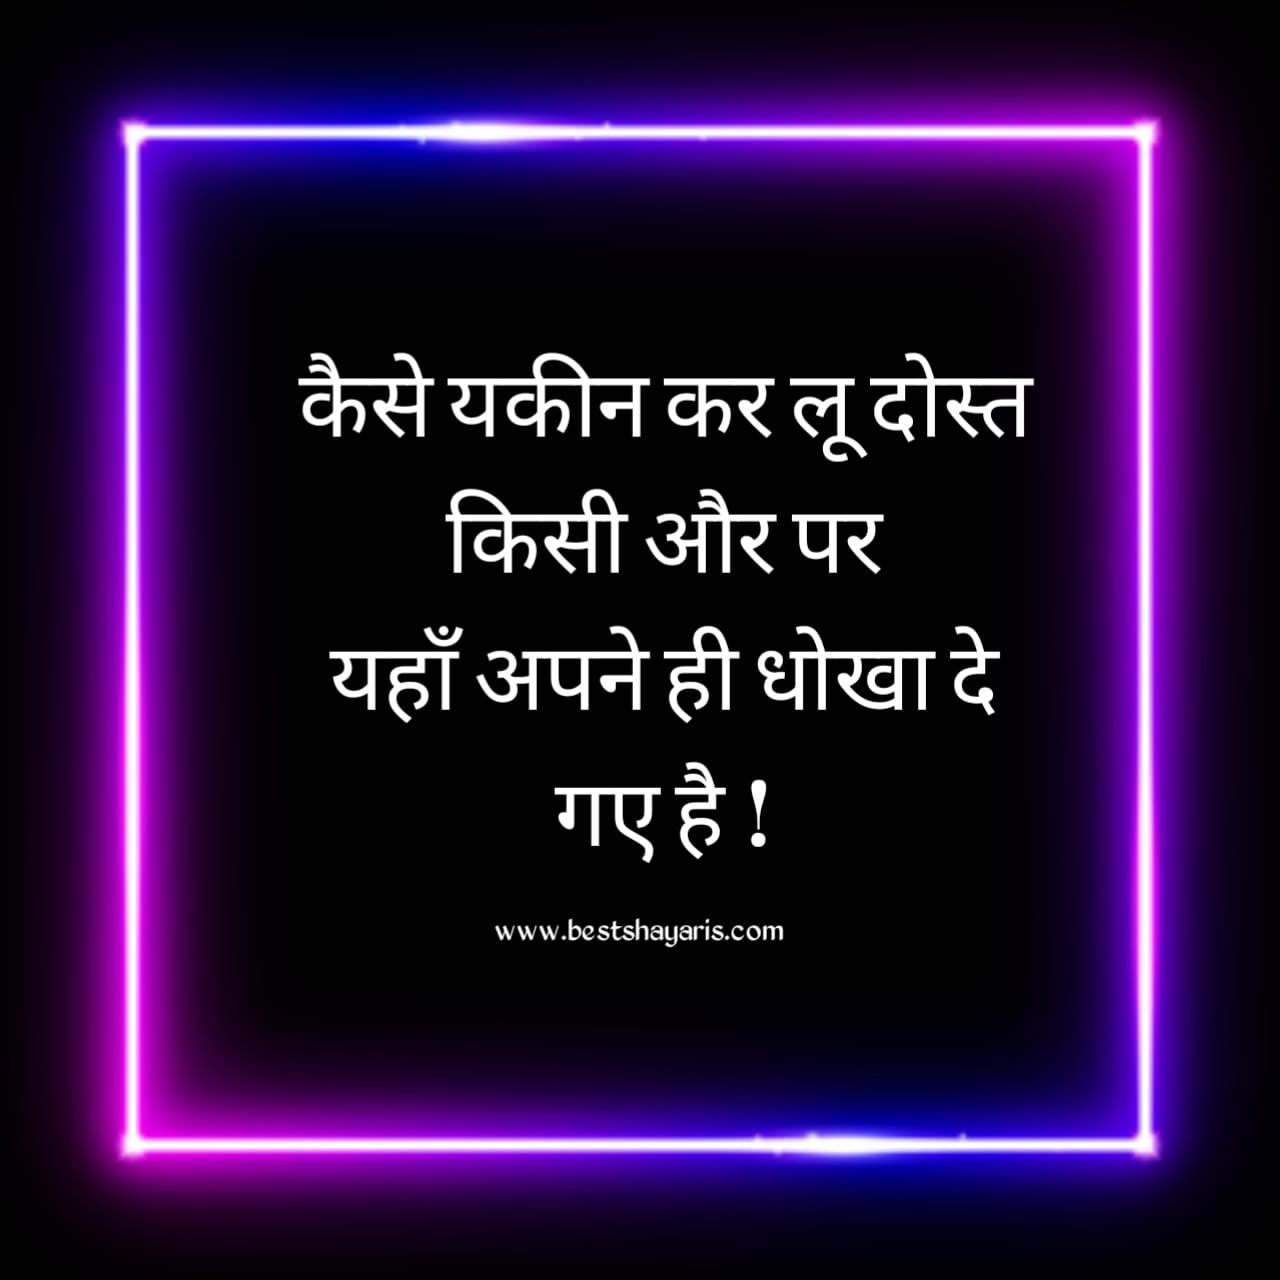 मतलबी लोगों से दूर रहो || Best Motivational speech in hindi by S2 Satya  Veer Singh Motivation - YouTube